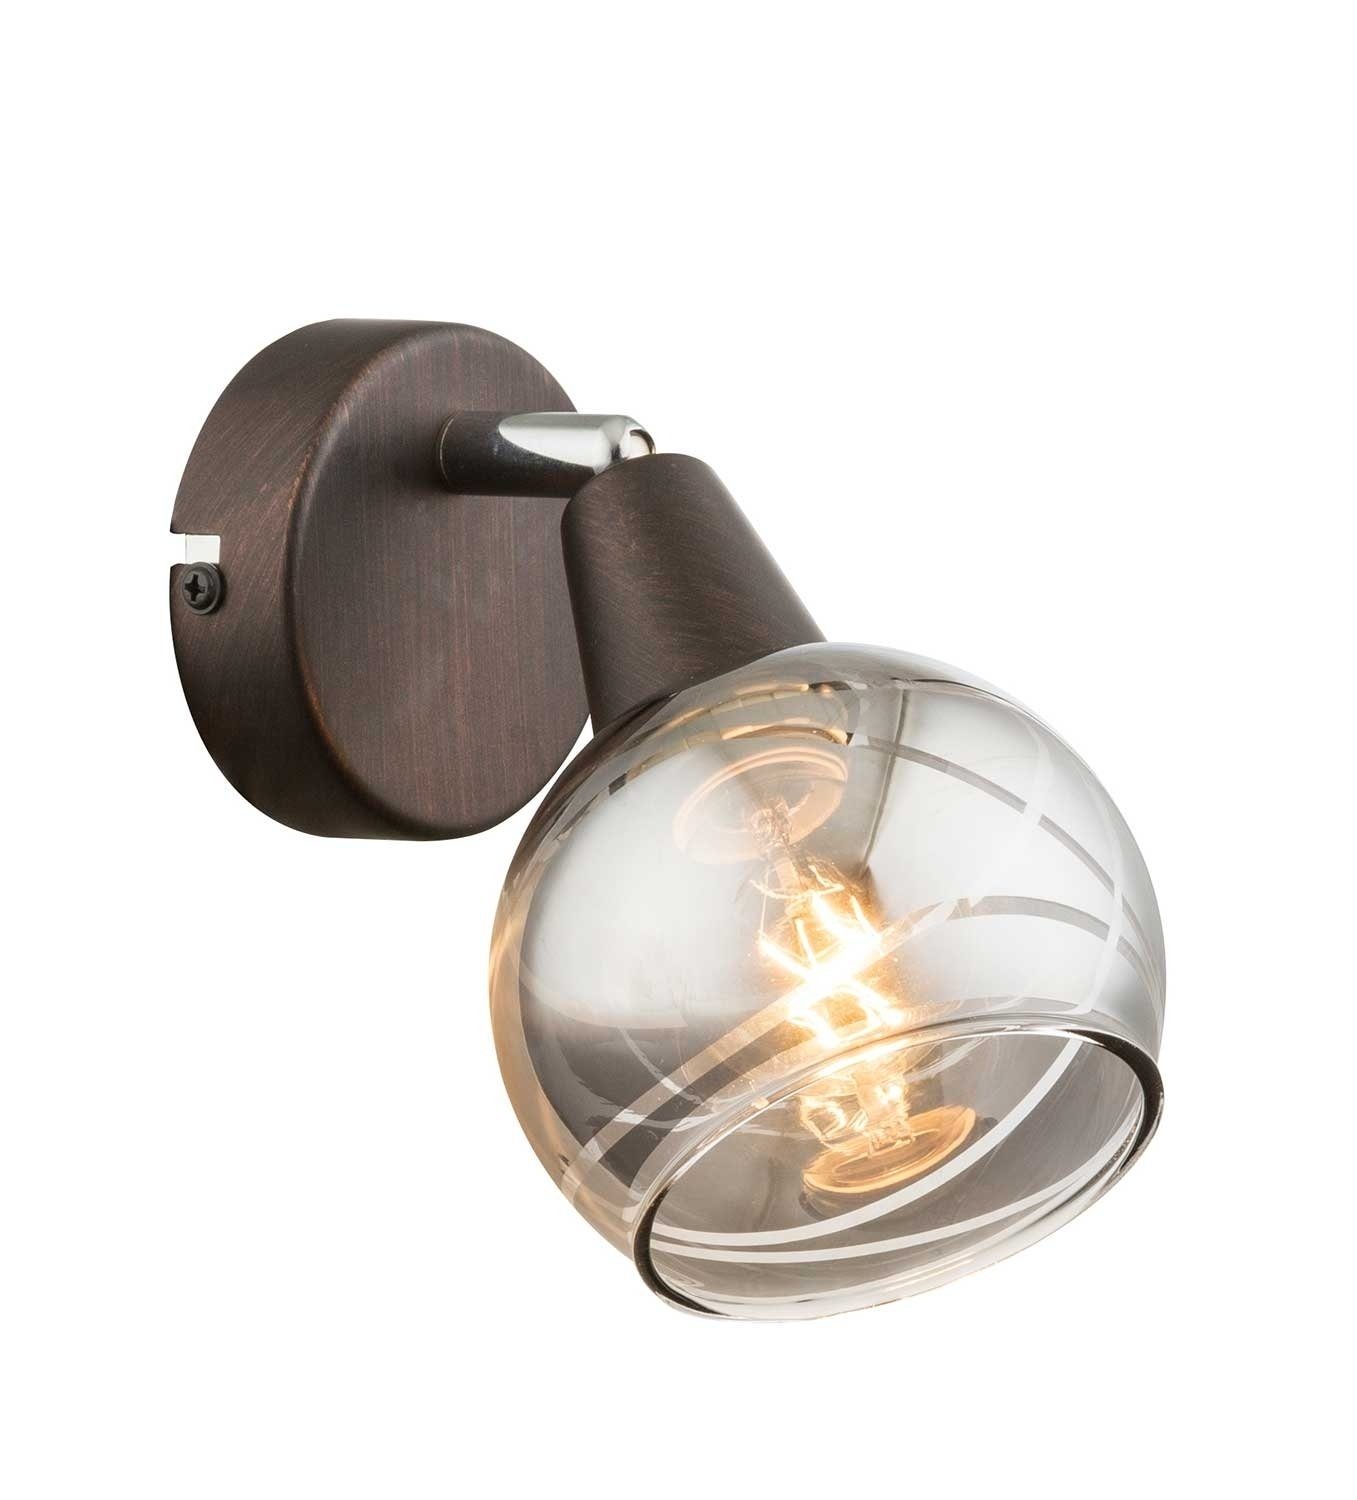 aus H Bronzefarben, LED cm, LED Rauchglas wechselbar, Globo Lampenschirm 15 ISLA, 1-flammig, Metall, Warmweiß, Wandleuchte